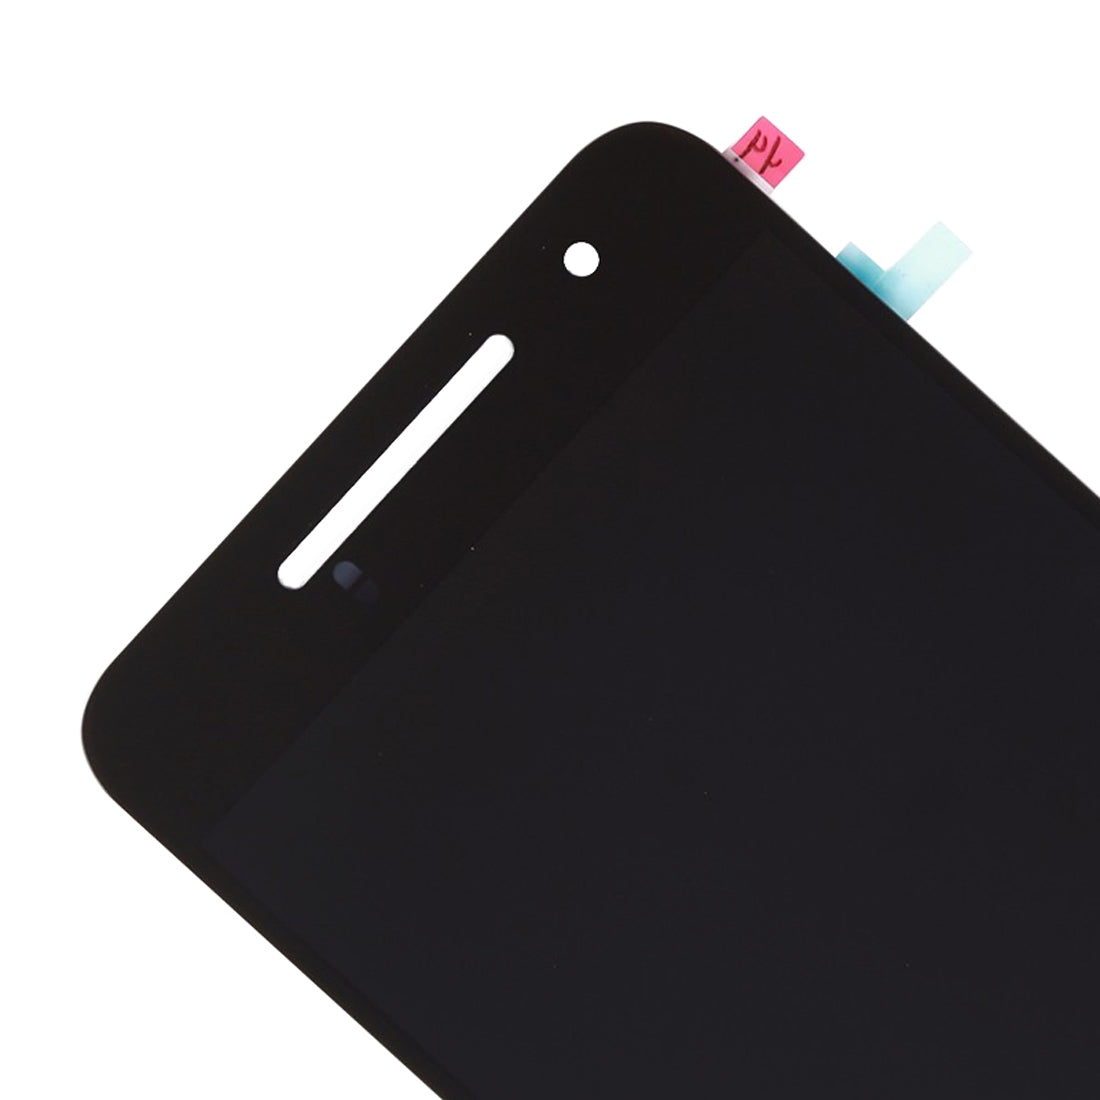 LCD Screen + Touch Digitizer Google Nexus 6P Black